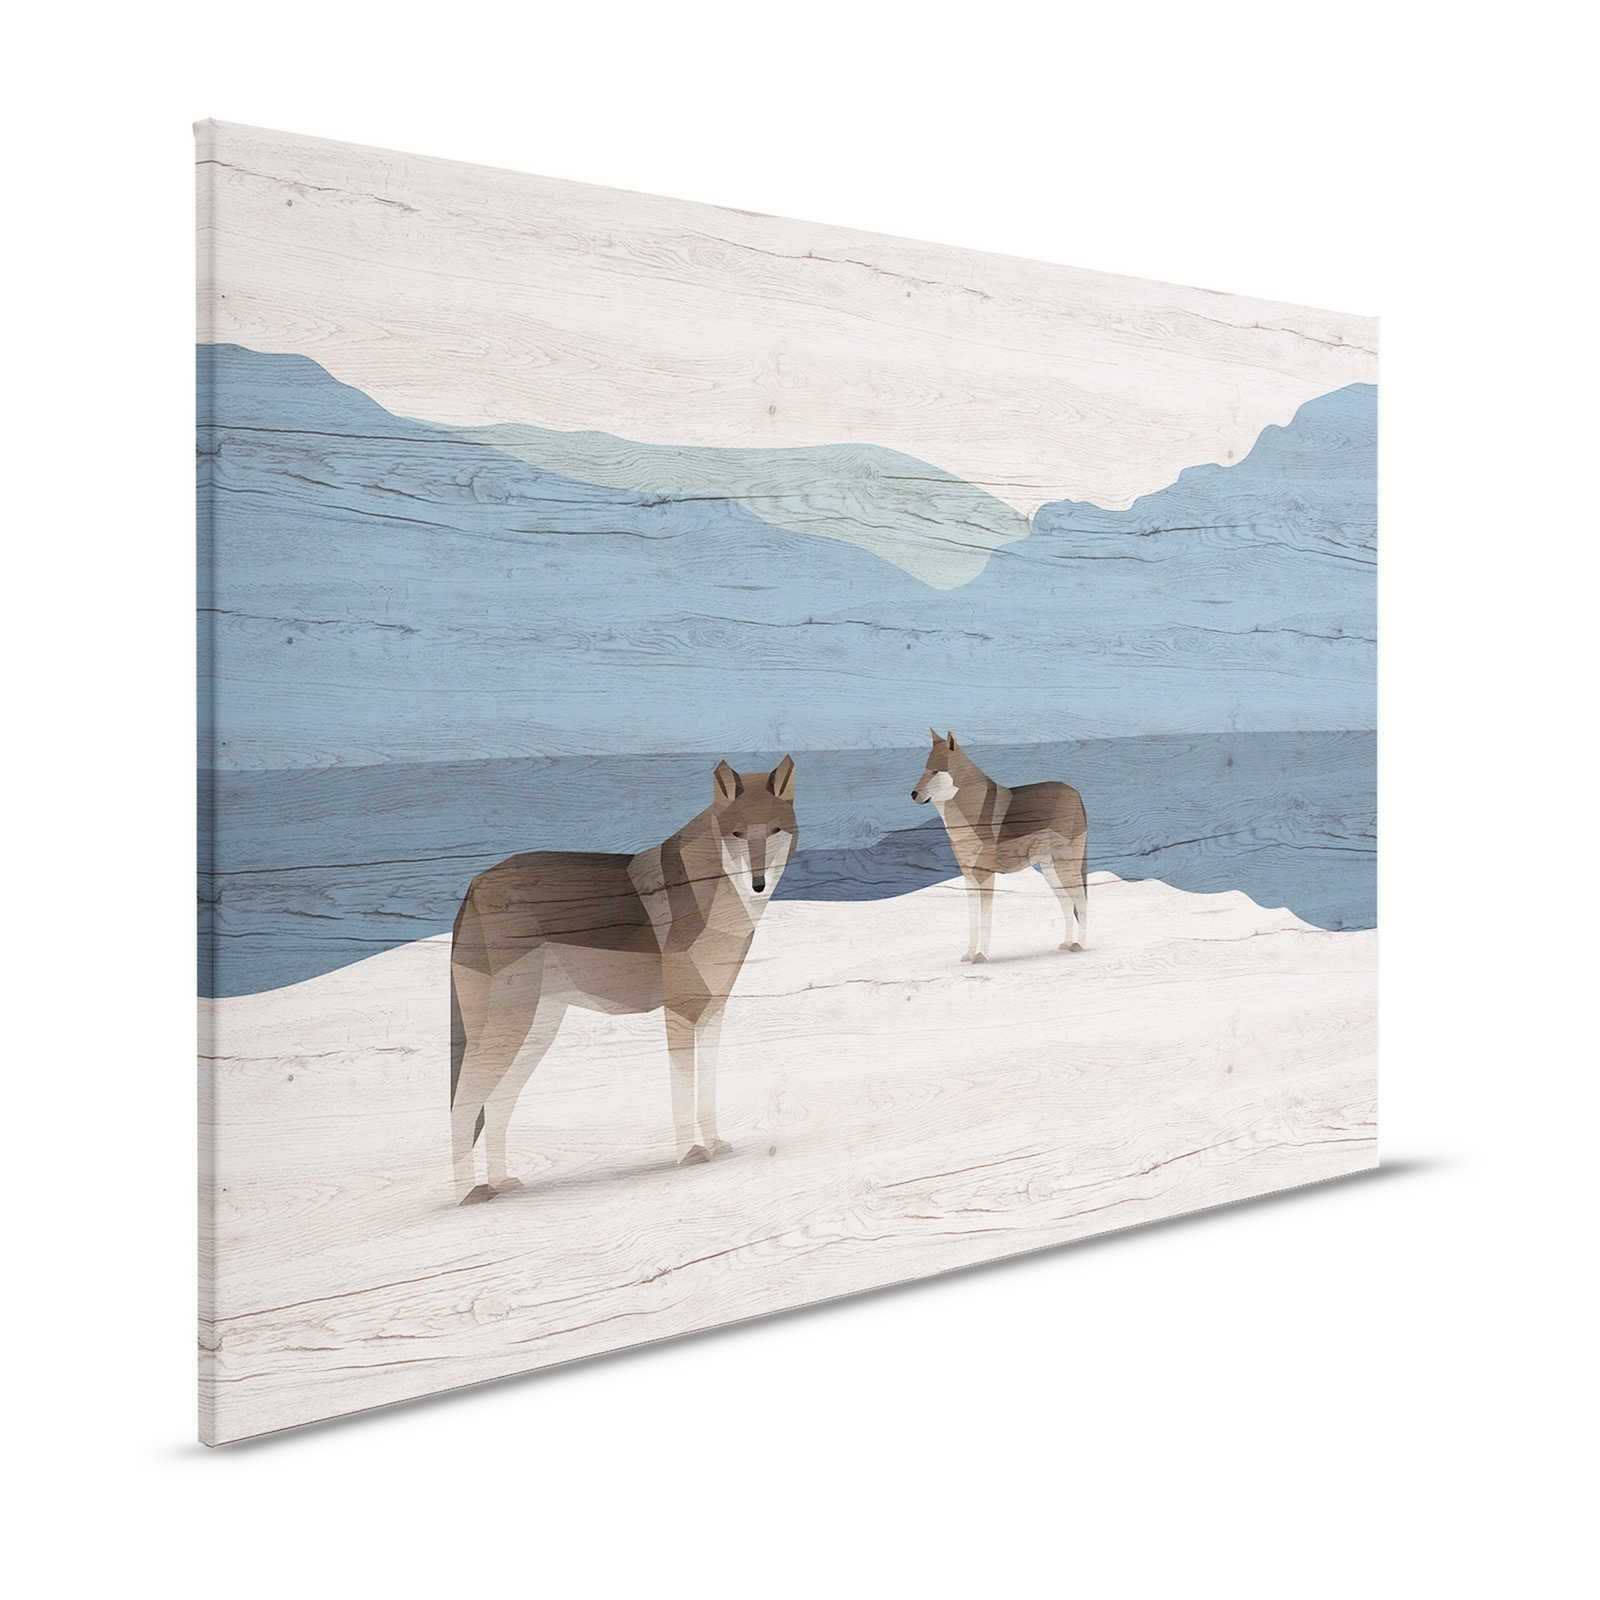 Yukon 1 - Canvas schilderij Mountains & Dogs met houtstructuur - 1.20 m x 0.80 m
